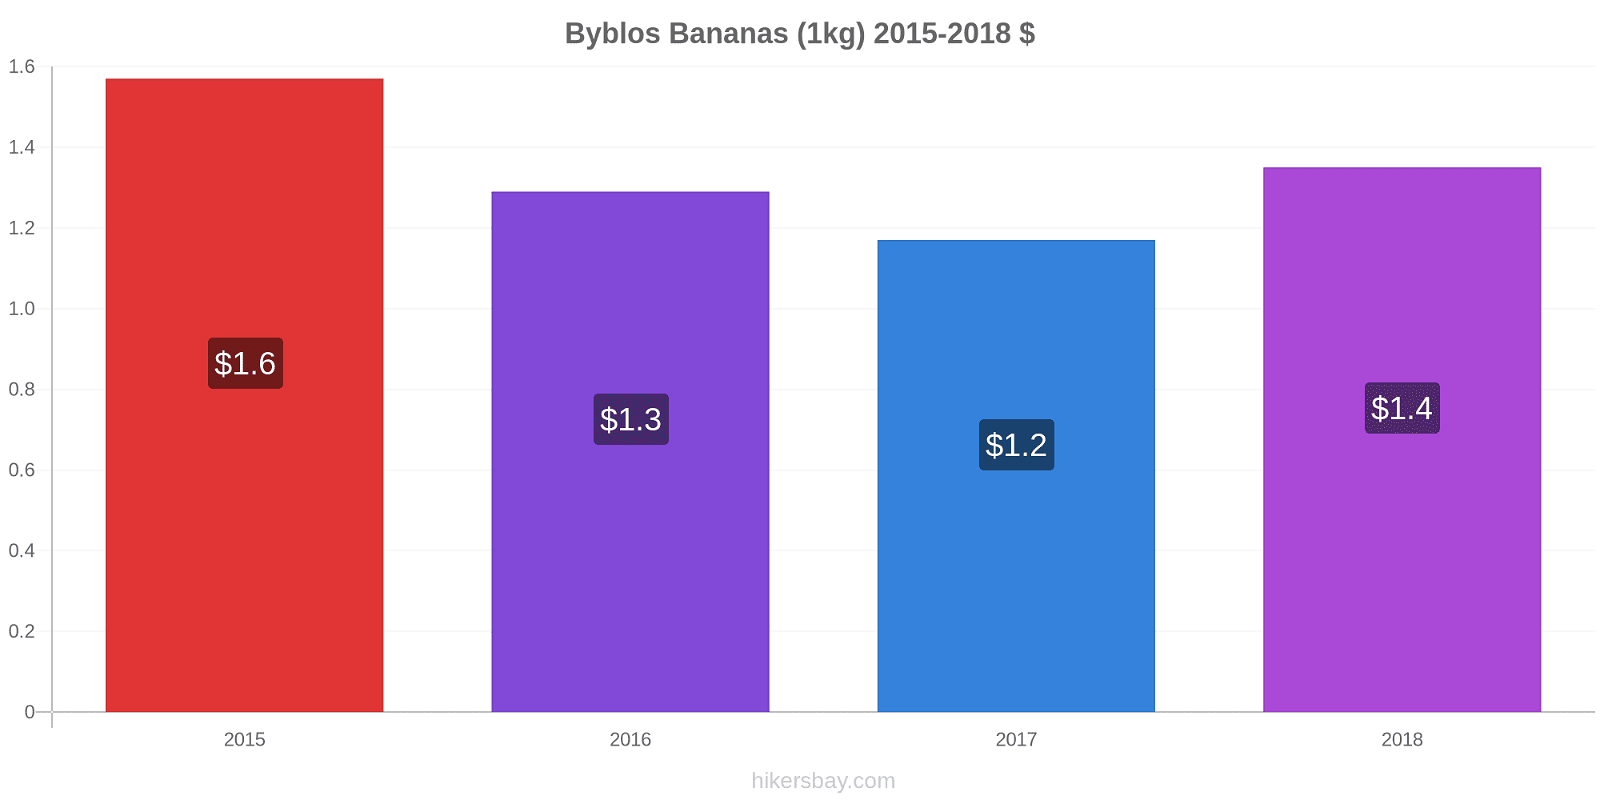 Byblos price changes Bananas (1kg) hikersbay.com